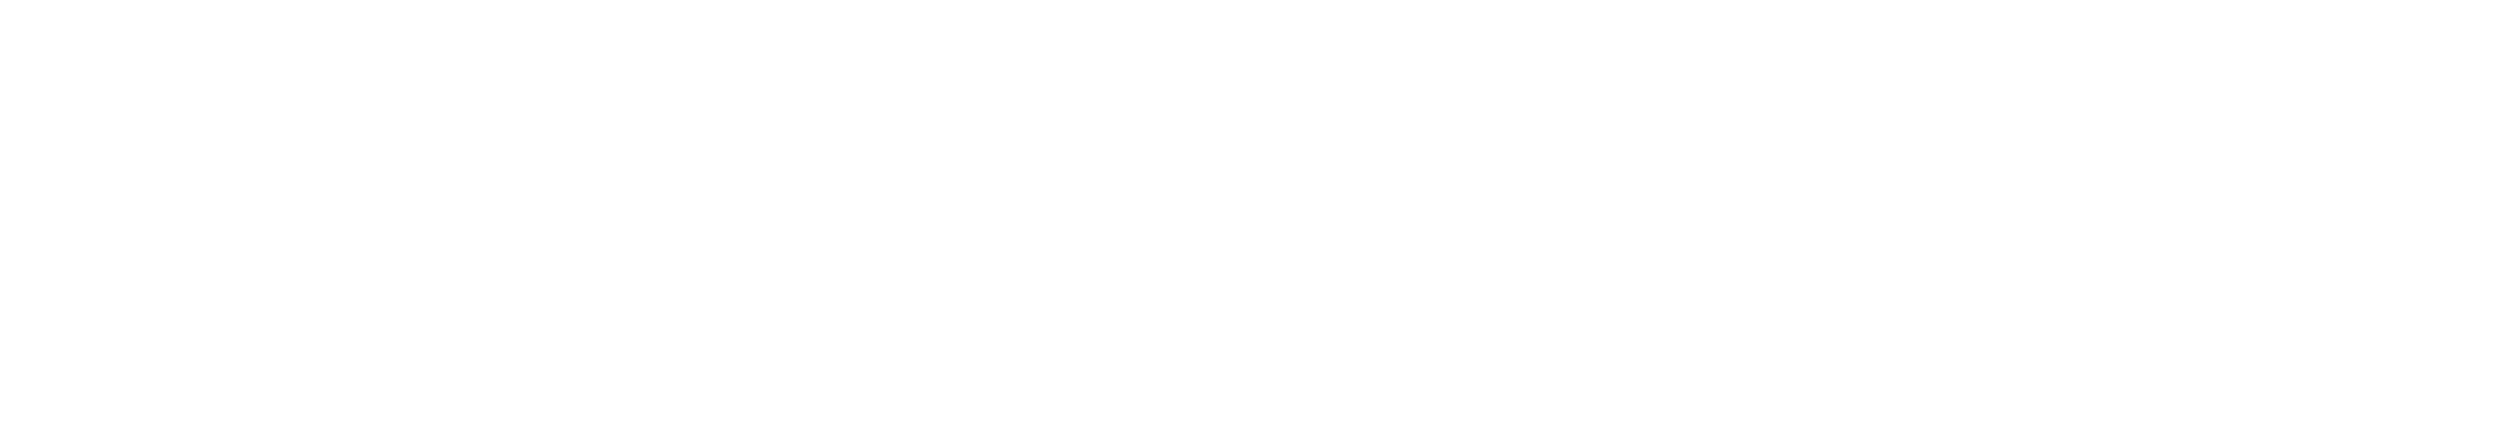 WGGB Logo - White@4x.png